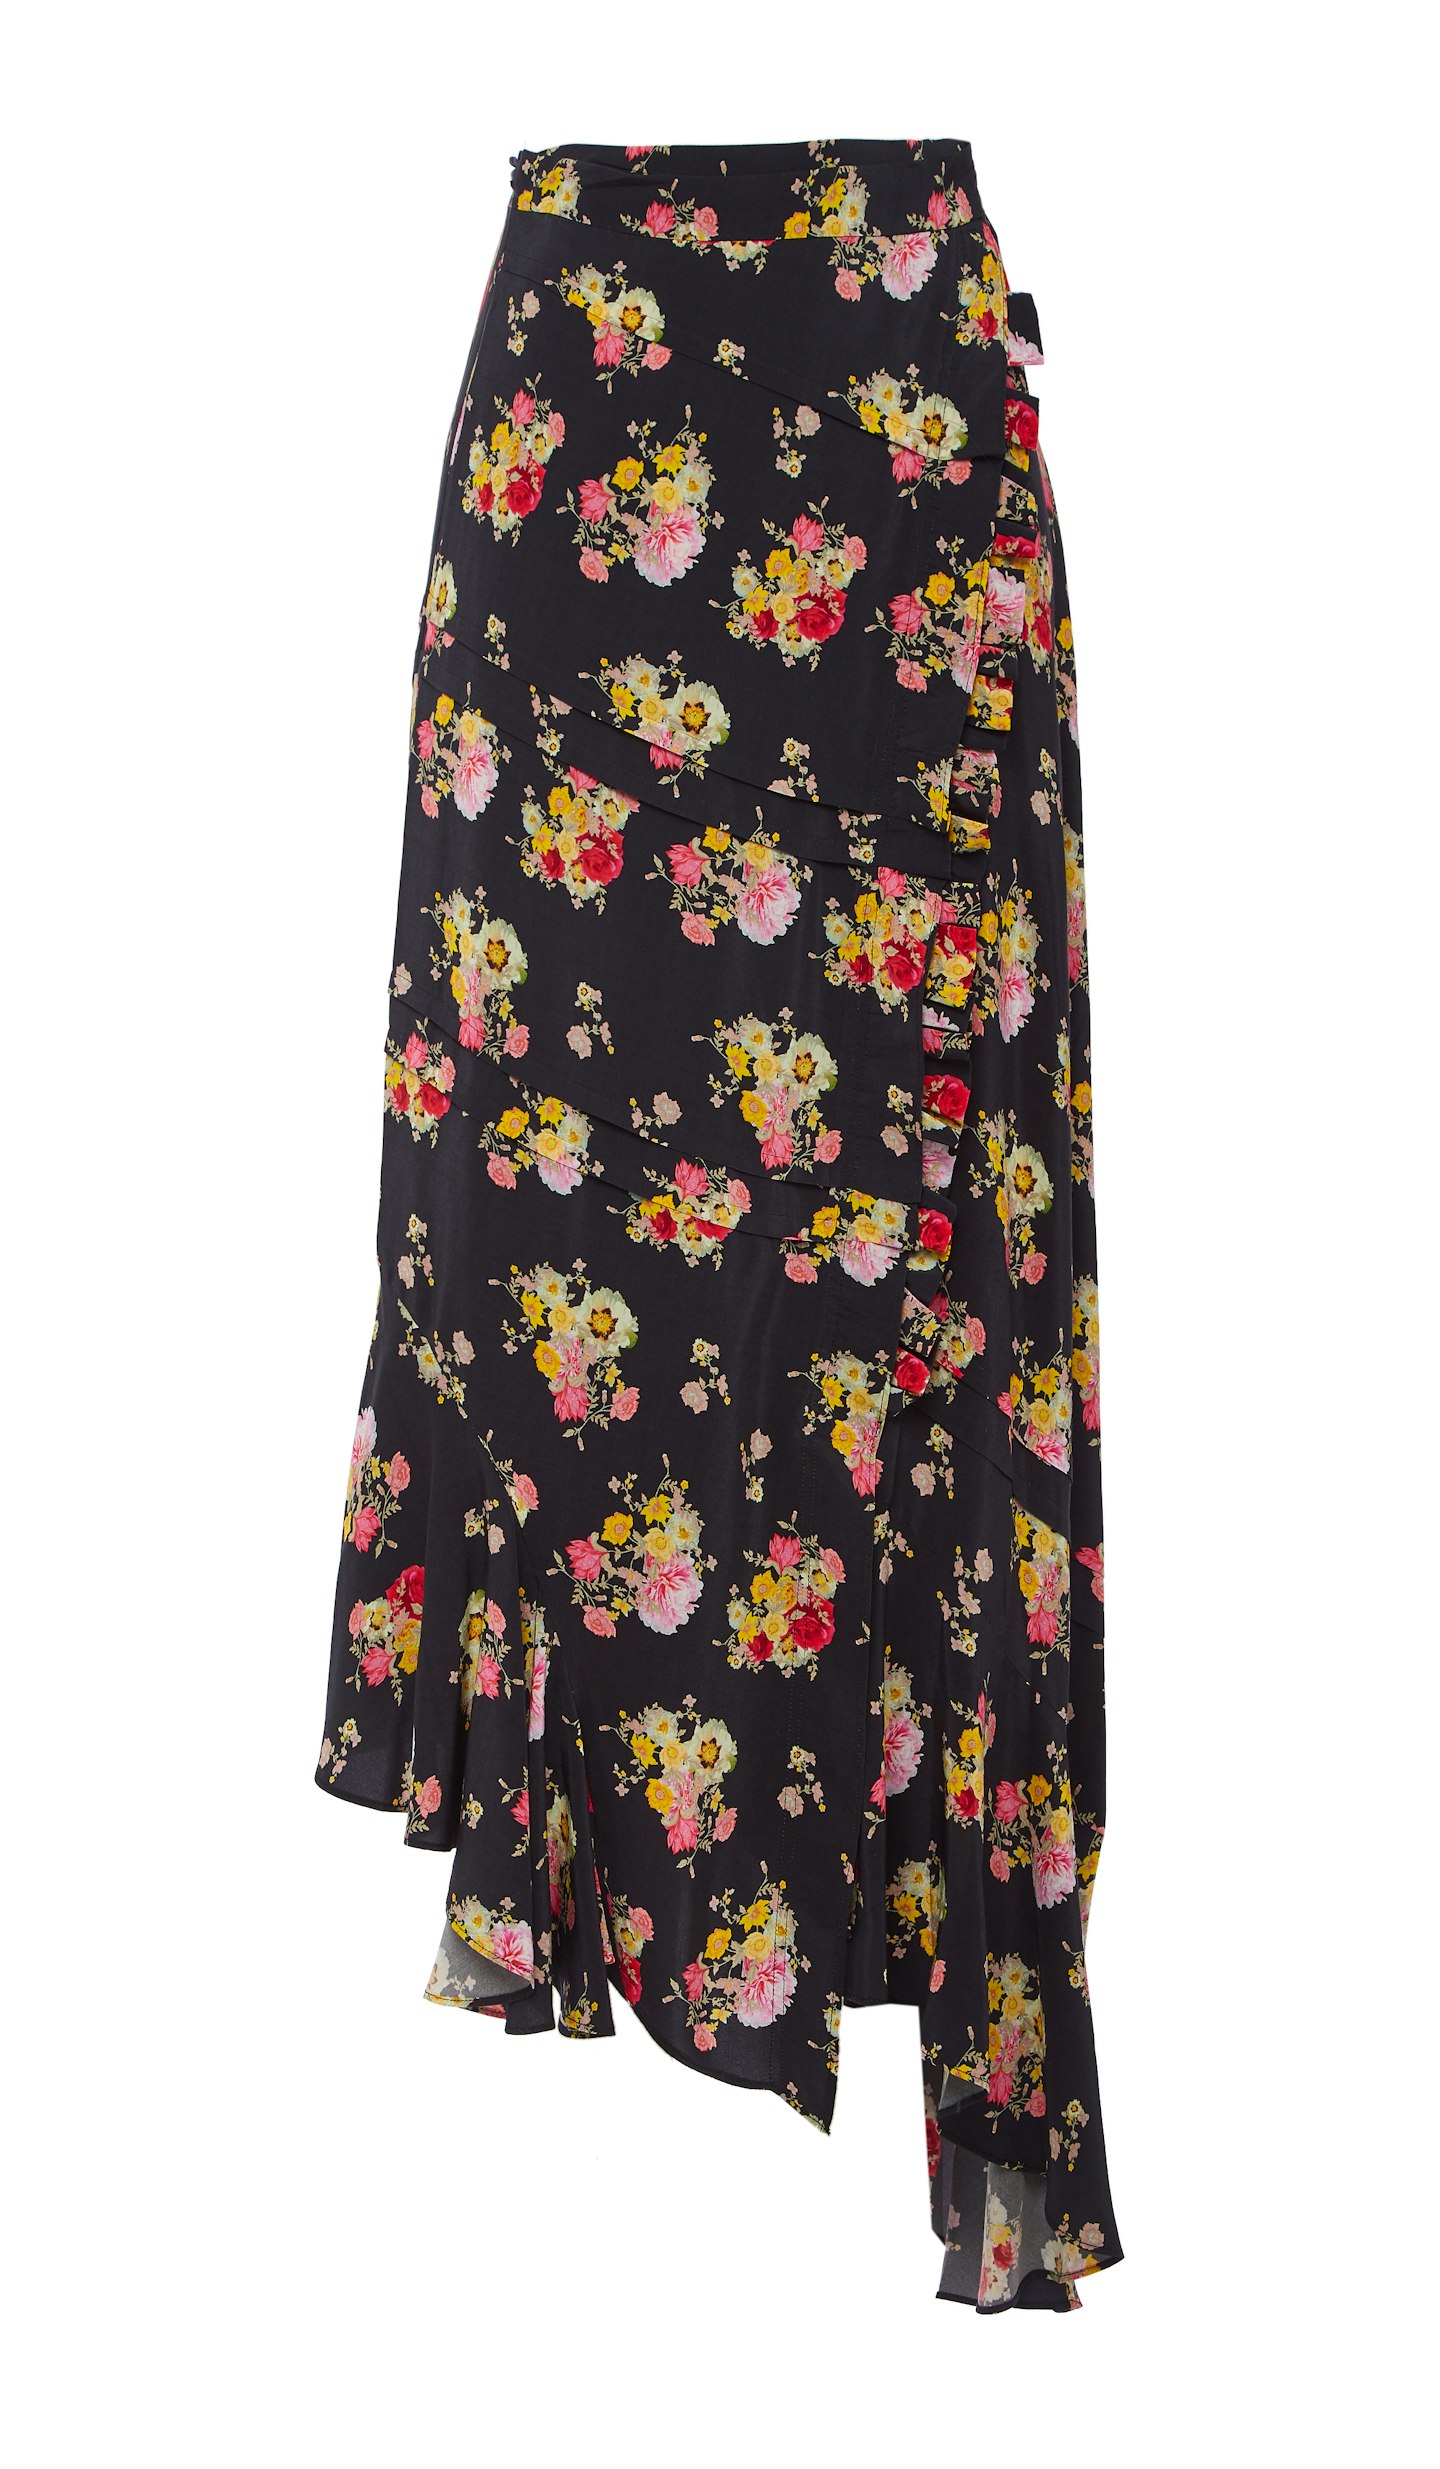 Preen Line, Sibyll Skirt, £170 at Amazon